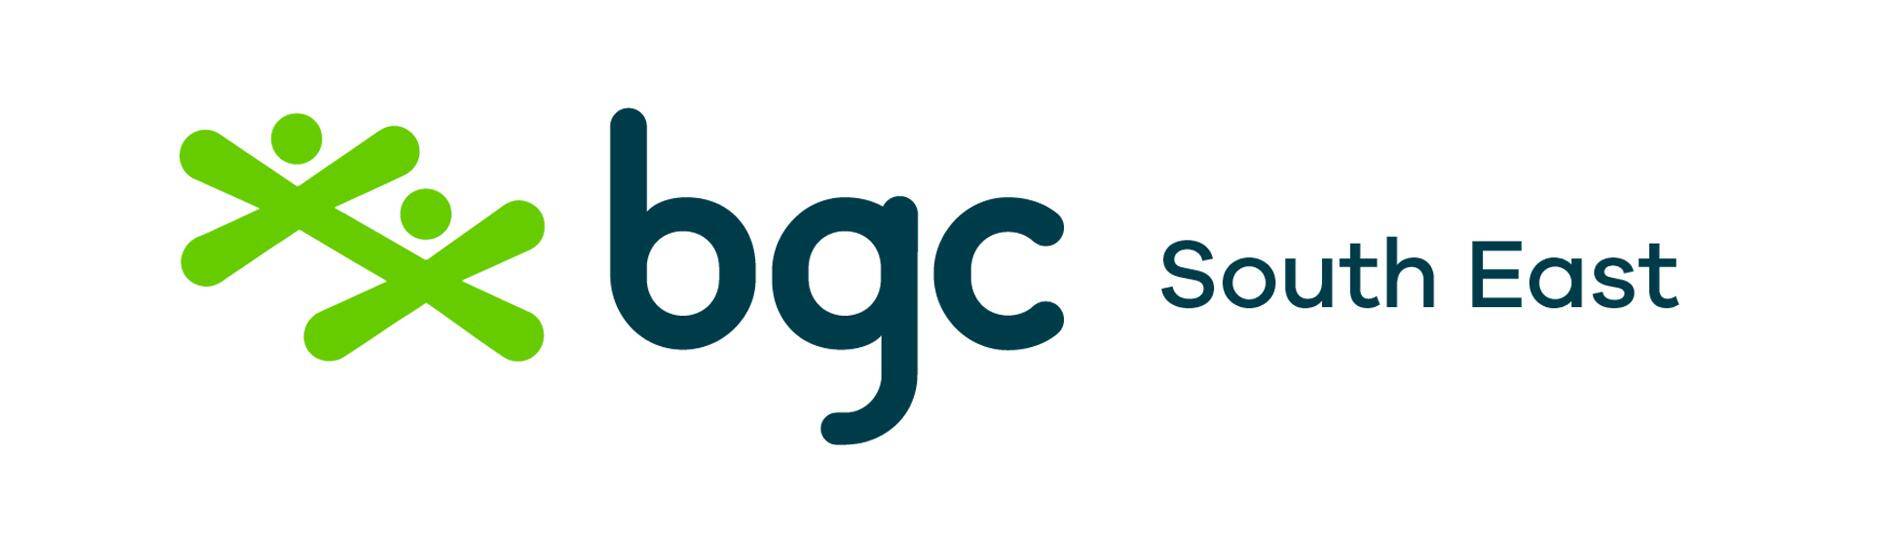 bgc_logo_web_page_story.jpg